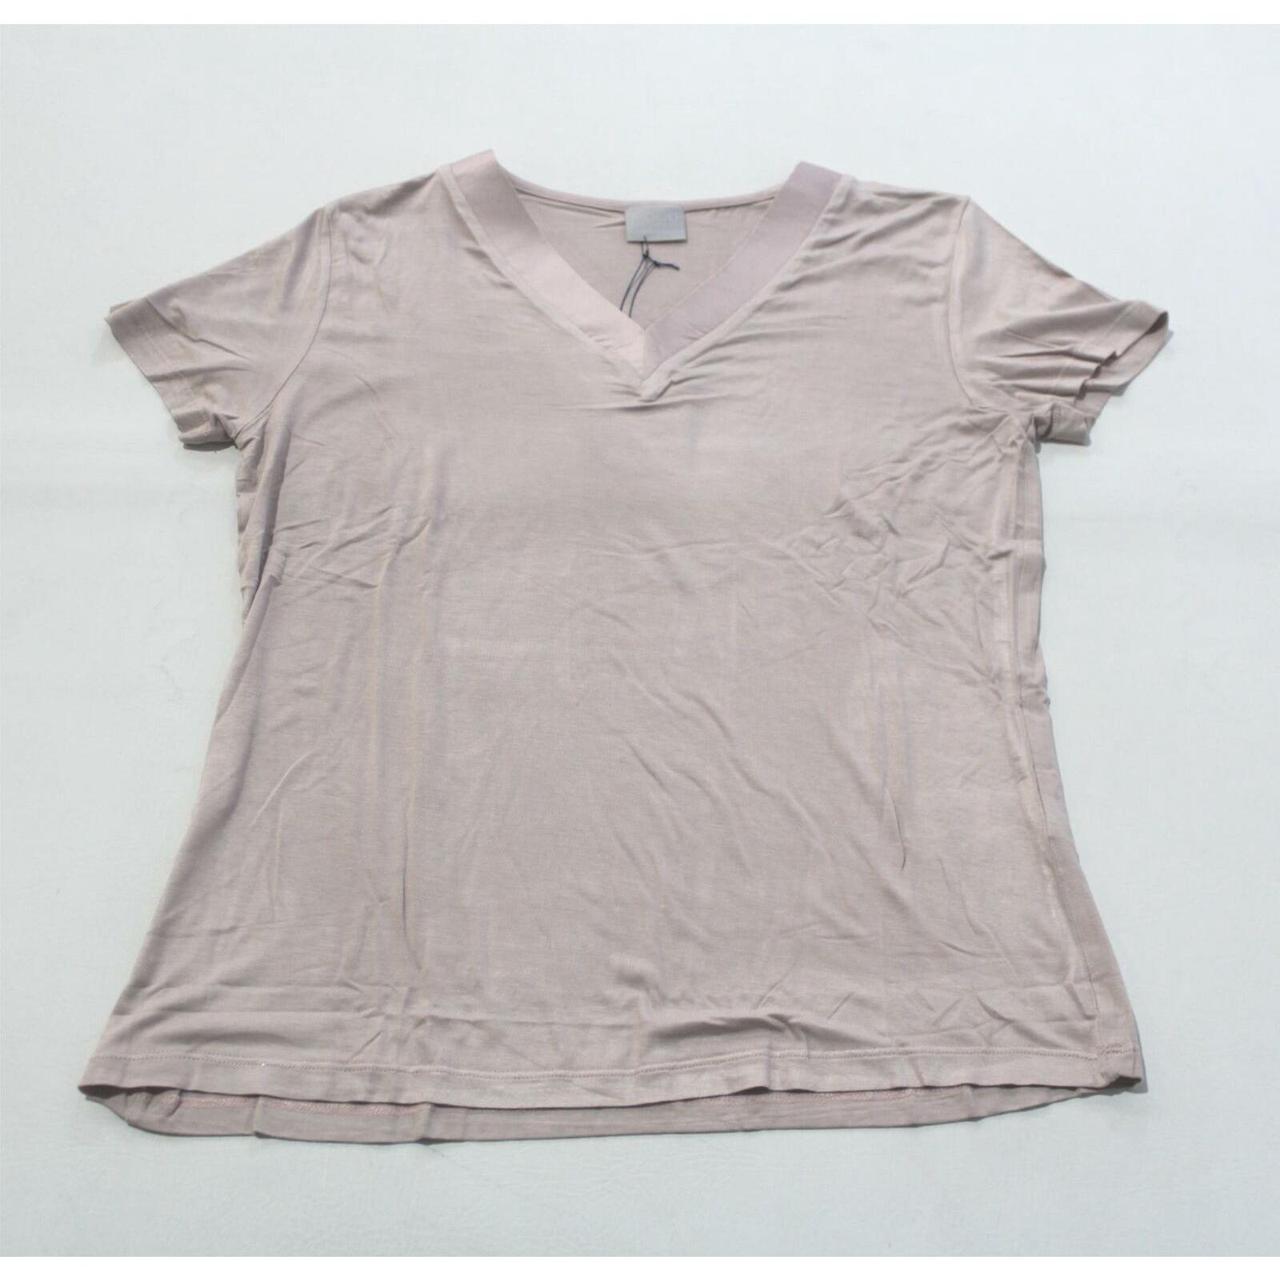 Product Image 2 - Mood Pajamas Women's Soft Cotton